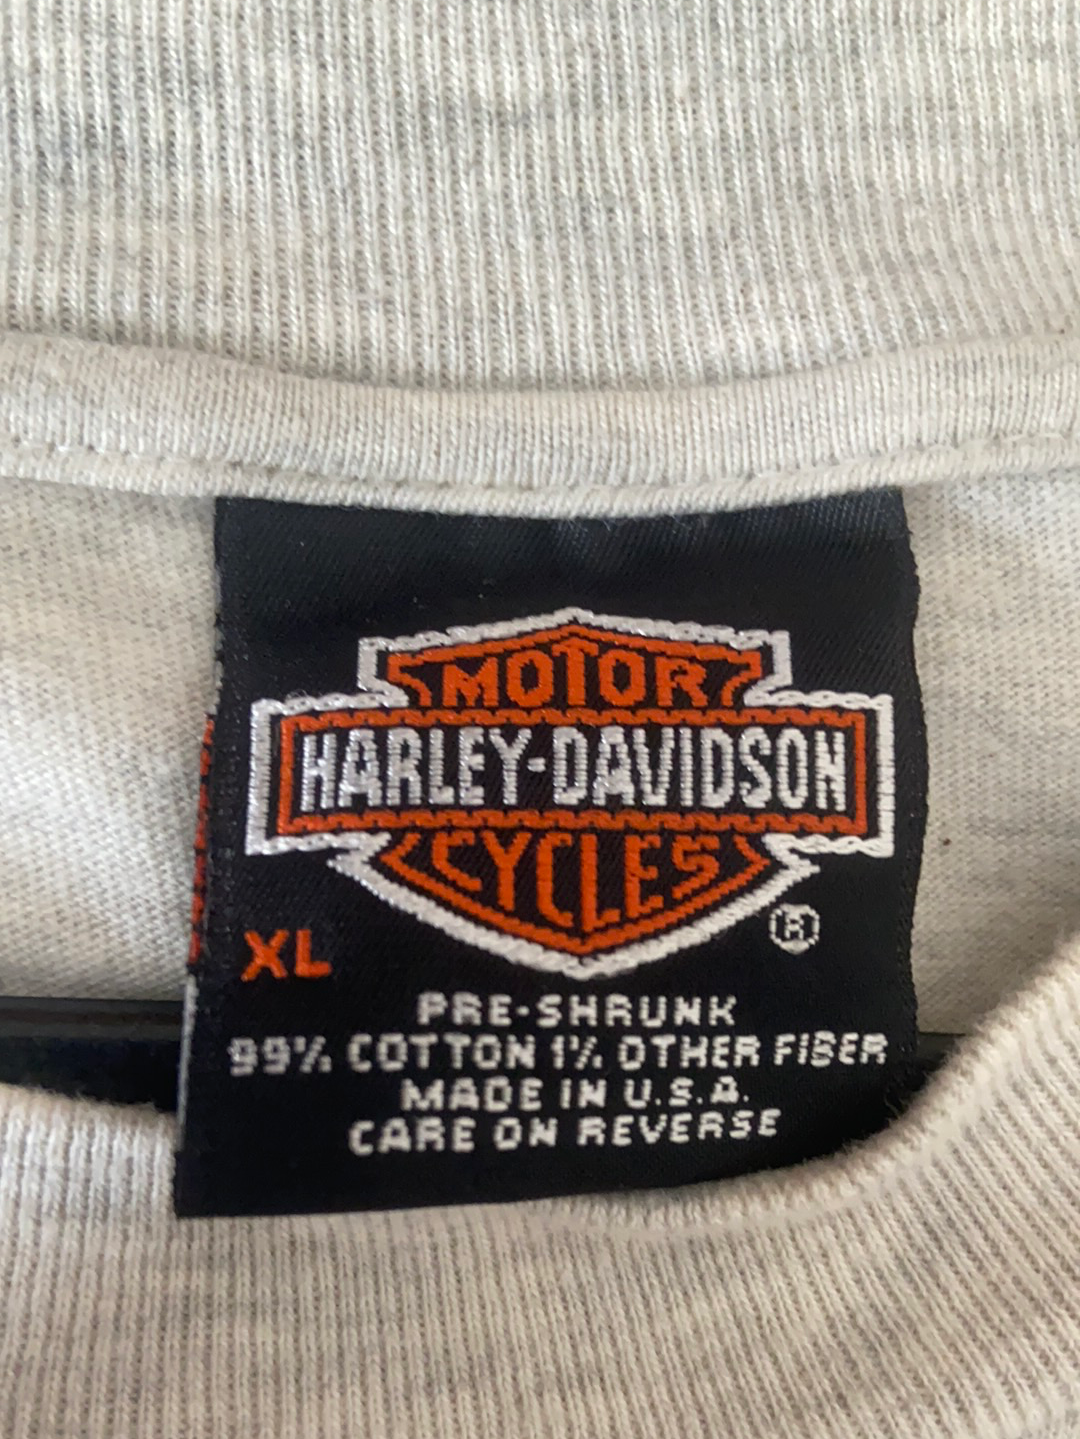 Harley Davidson Vintage Tee - XL